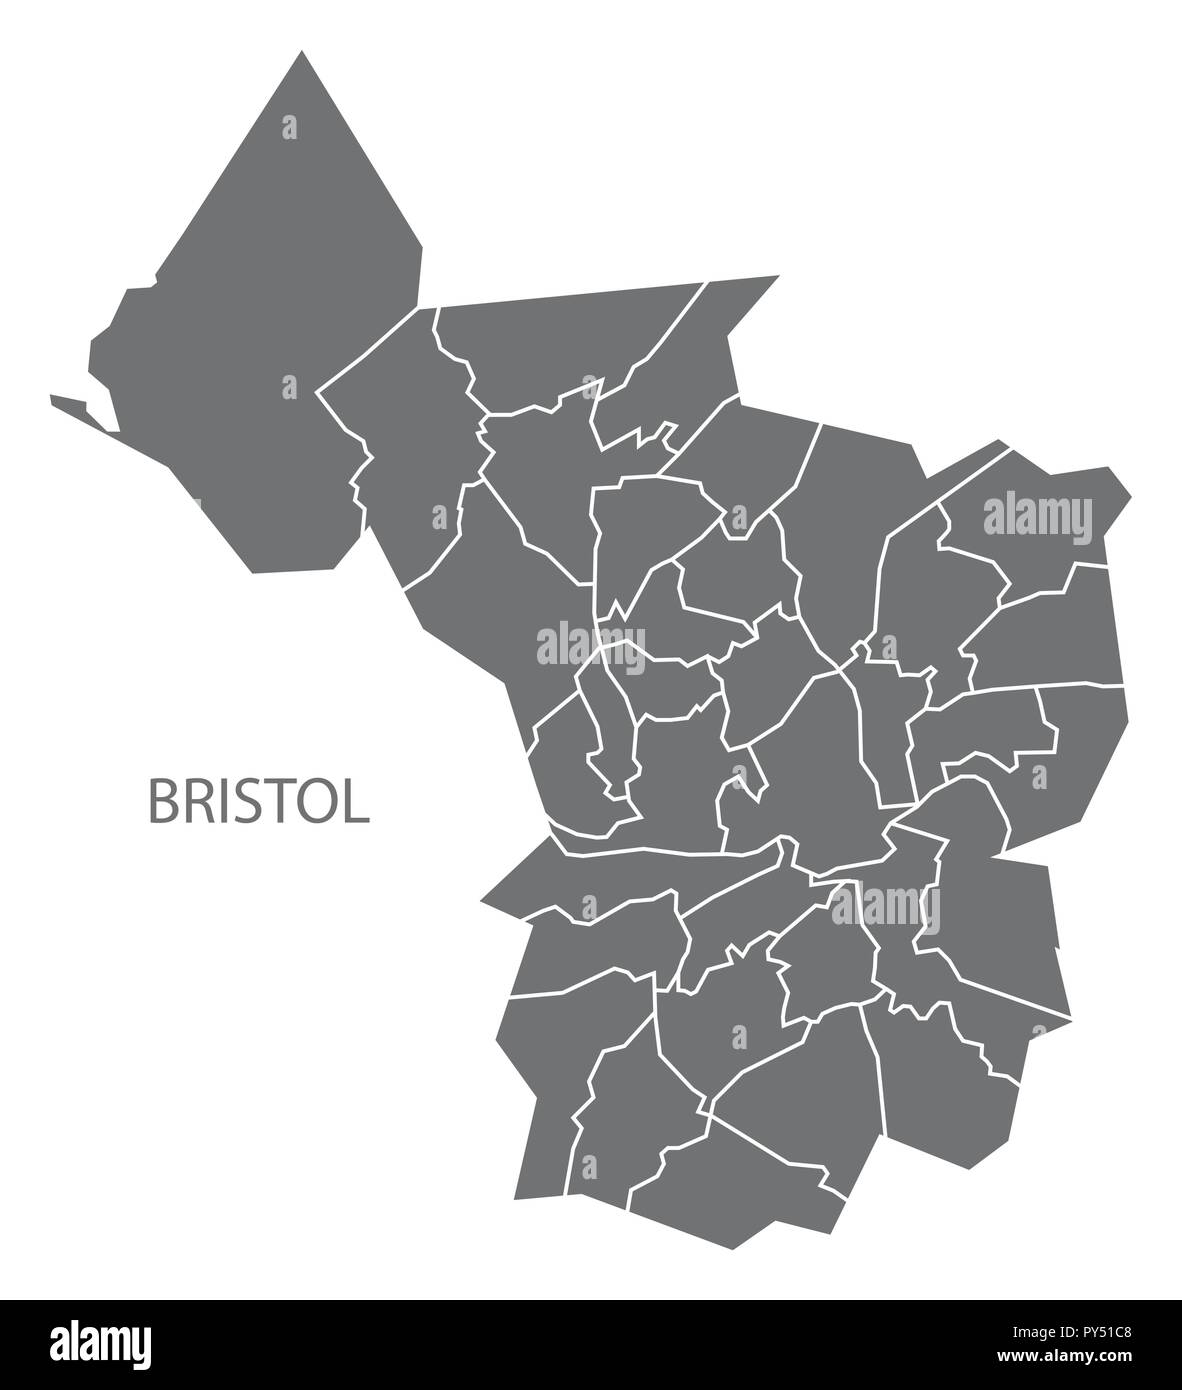 Bristol City Karte mit Stationen grau Abbildung silhouette Form Stock Vektor